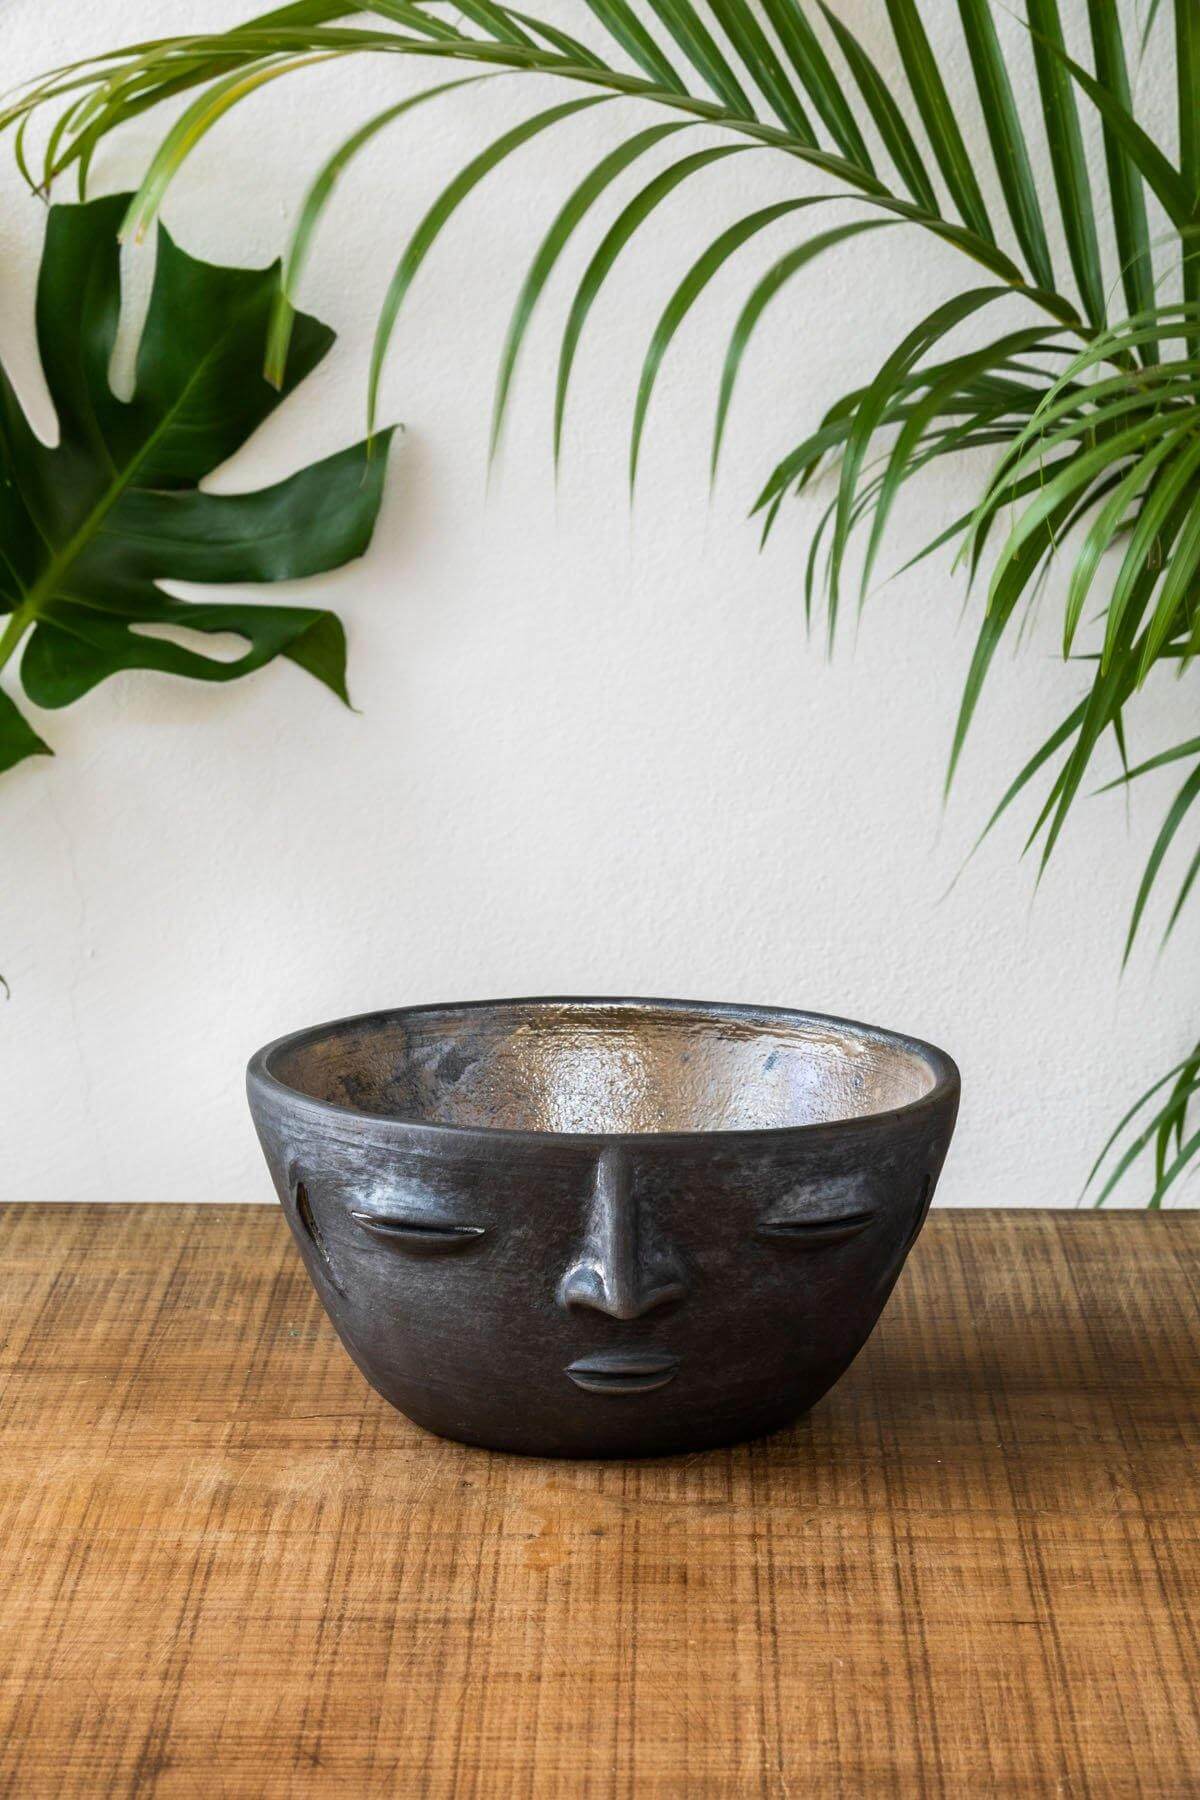 Faced Ceramic Decorative Bowl by Ana María Hernández - Wool+Clay